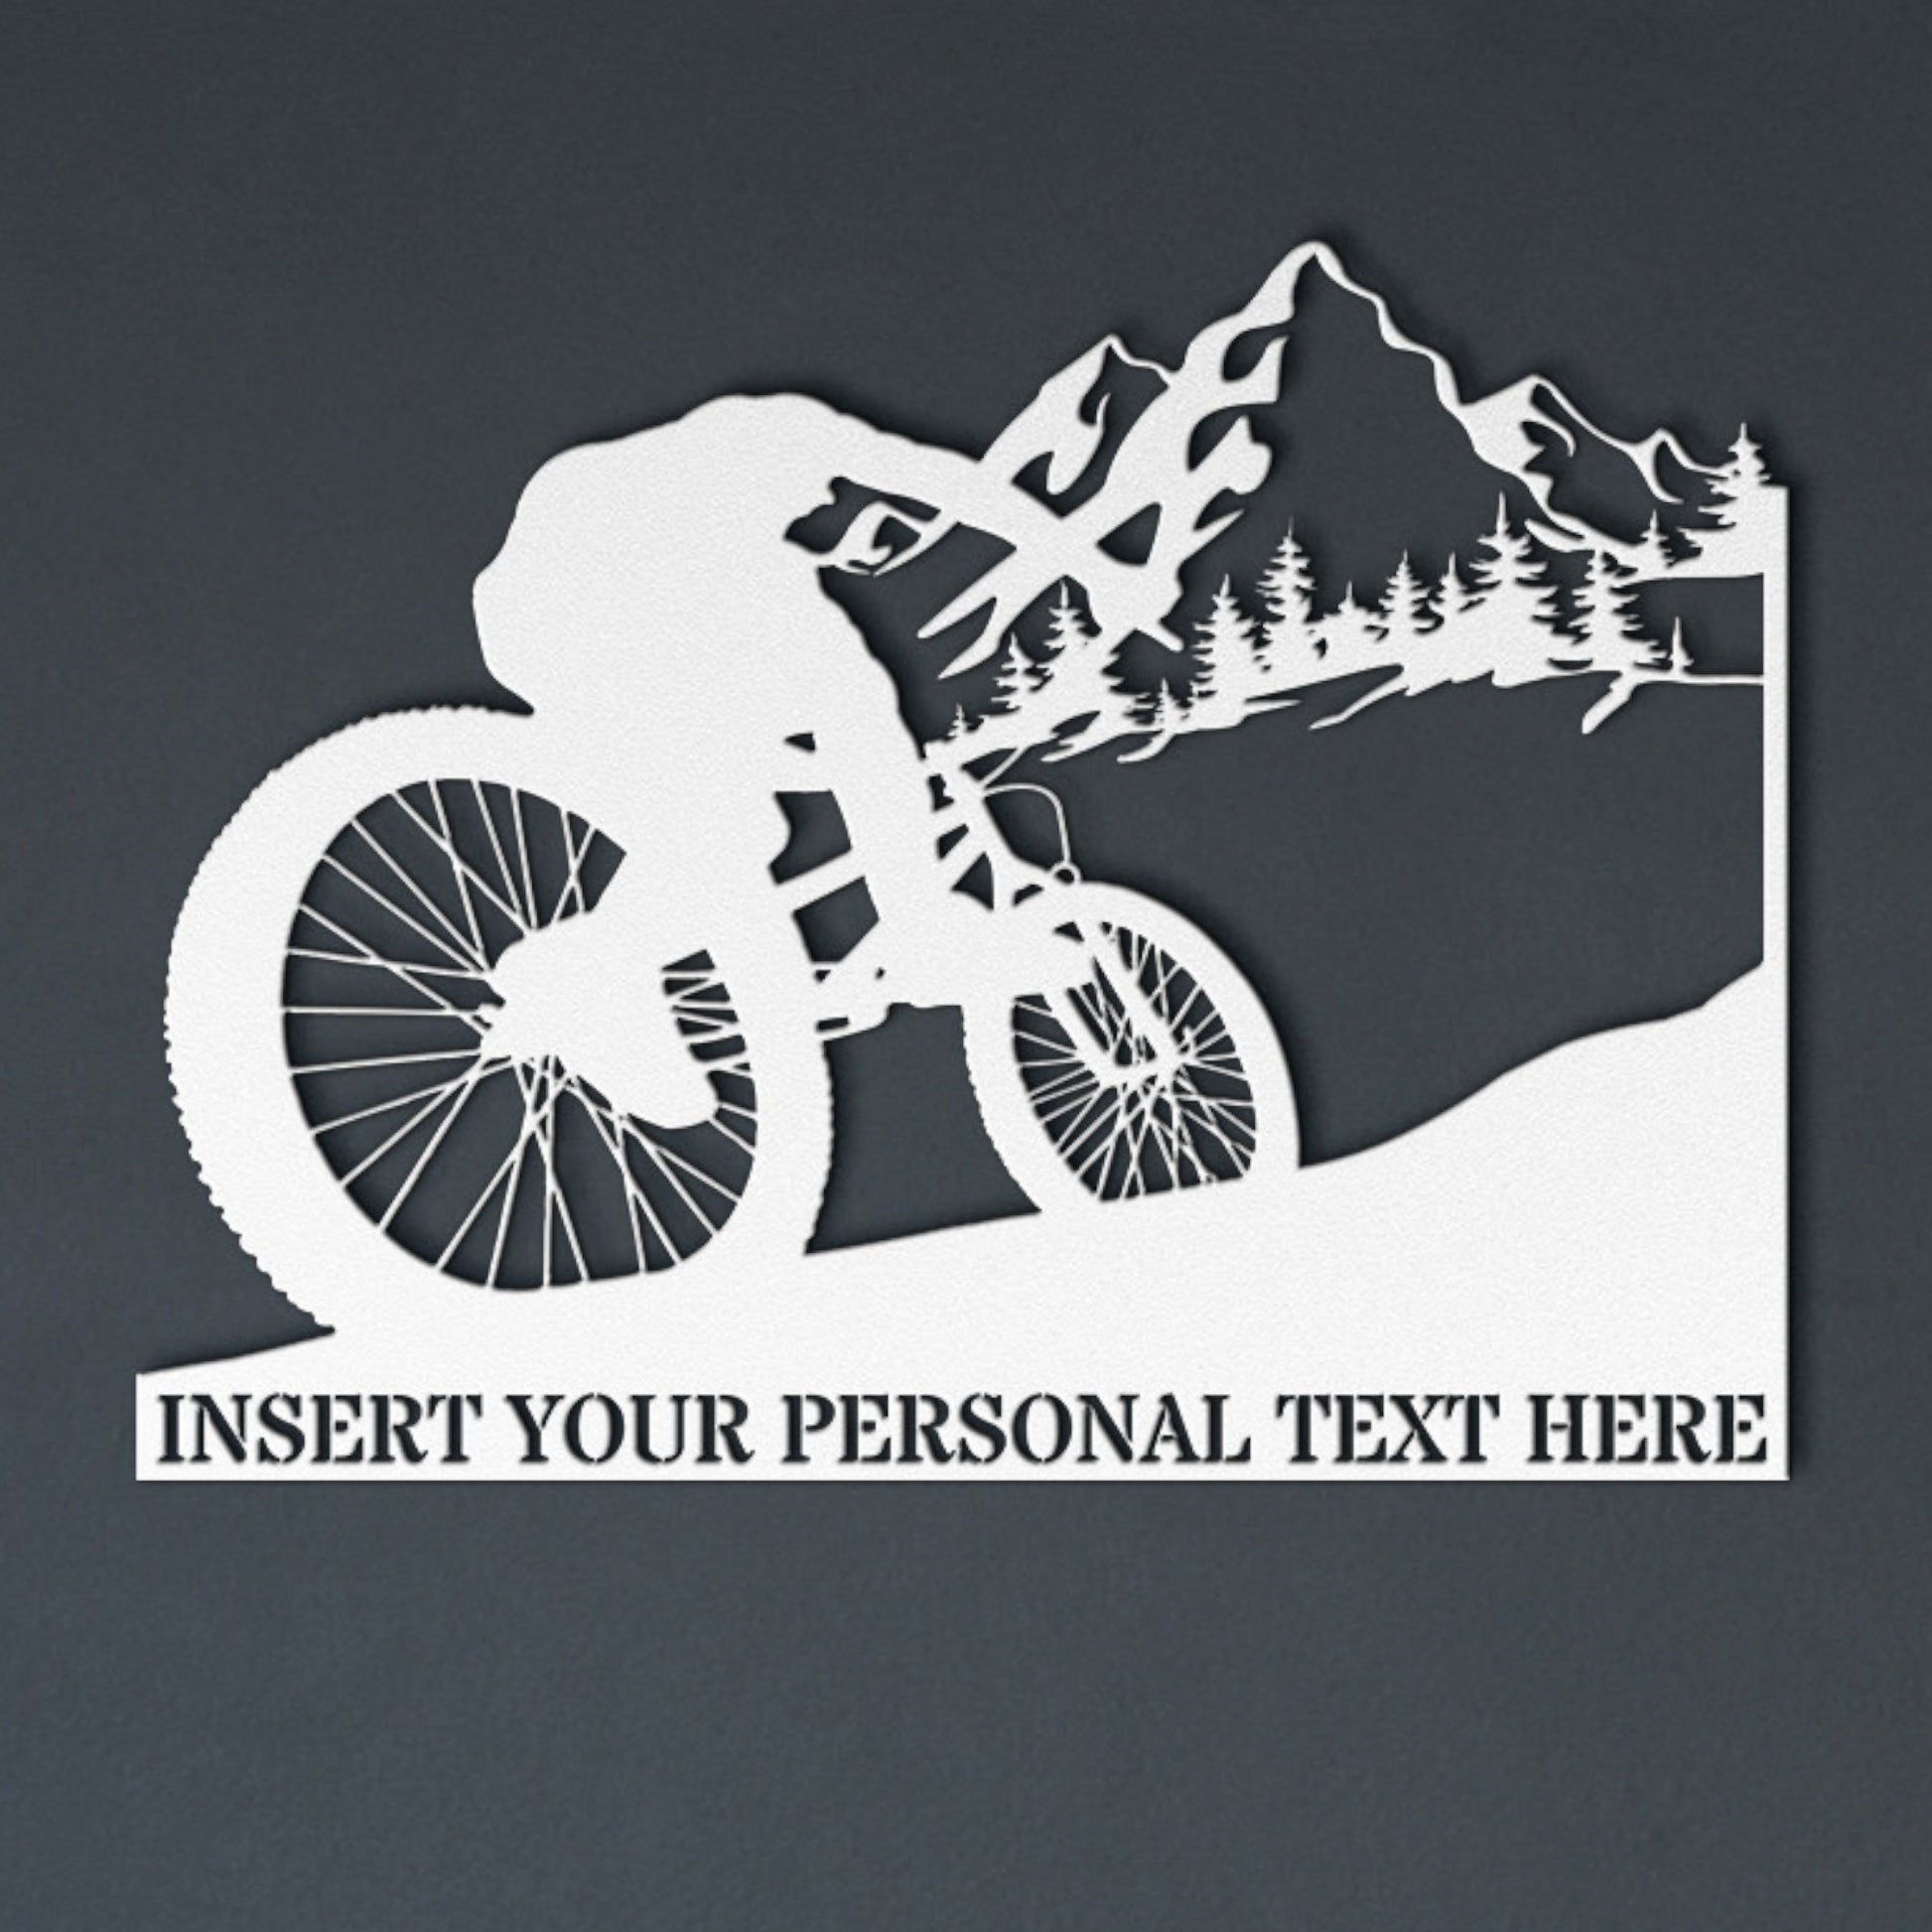 Personalized MTB Name Metal Sign. Custom Trail Bike Rider Wall Decor Gift. Personal Bicycle Lover Gift. Mountan Bike Garage Wall Hanging